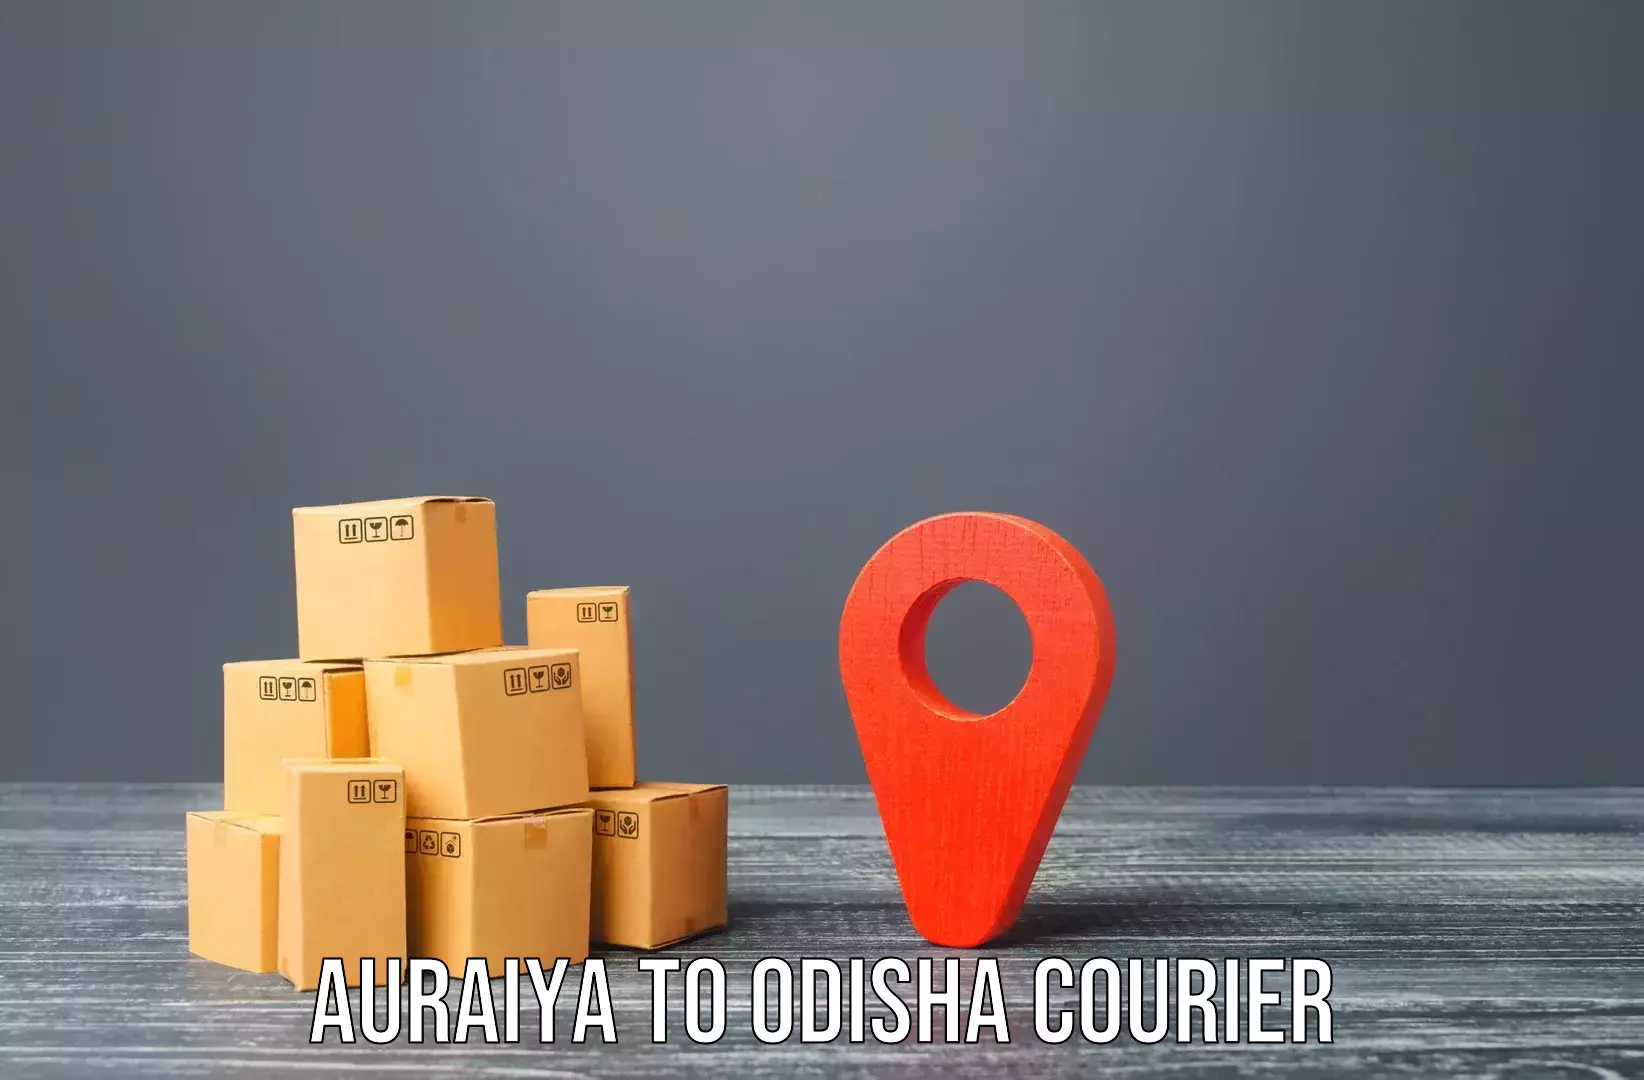 Furniture relocation experts Auraiya to Odisha